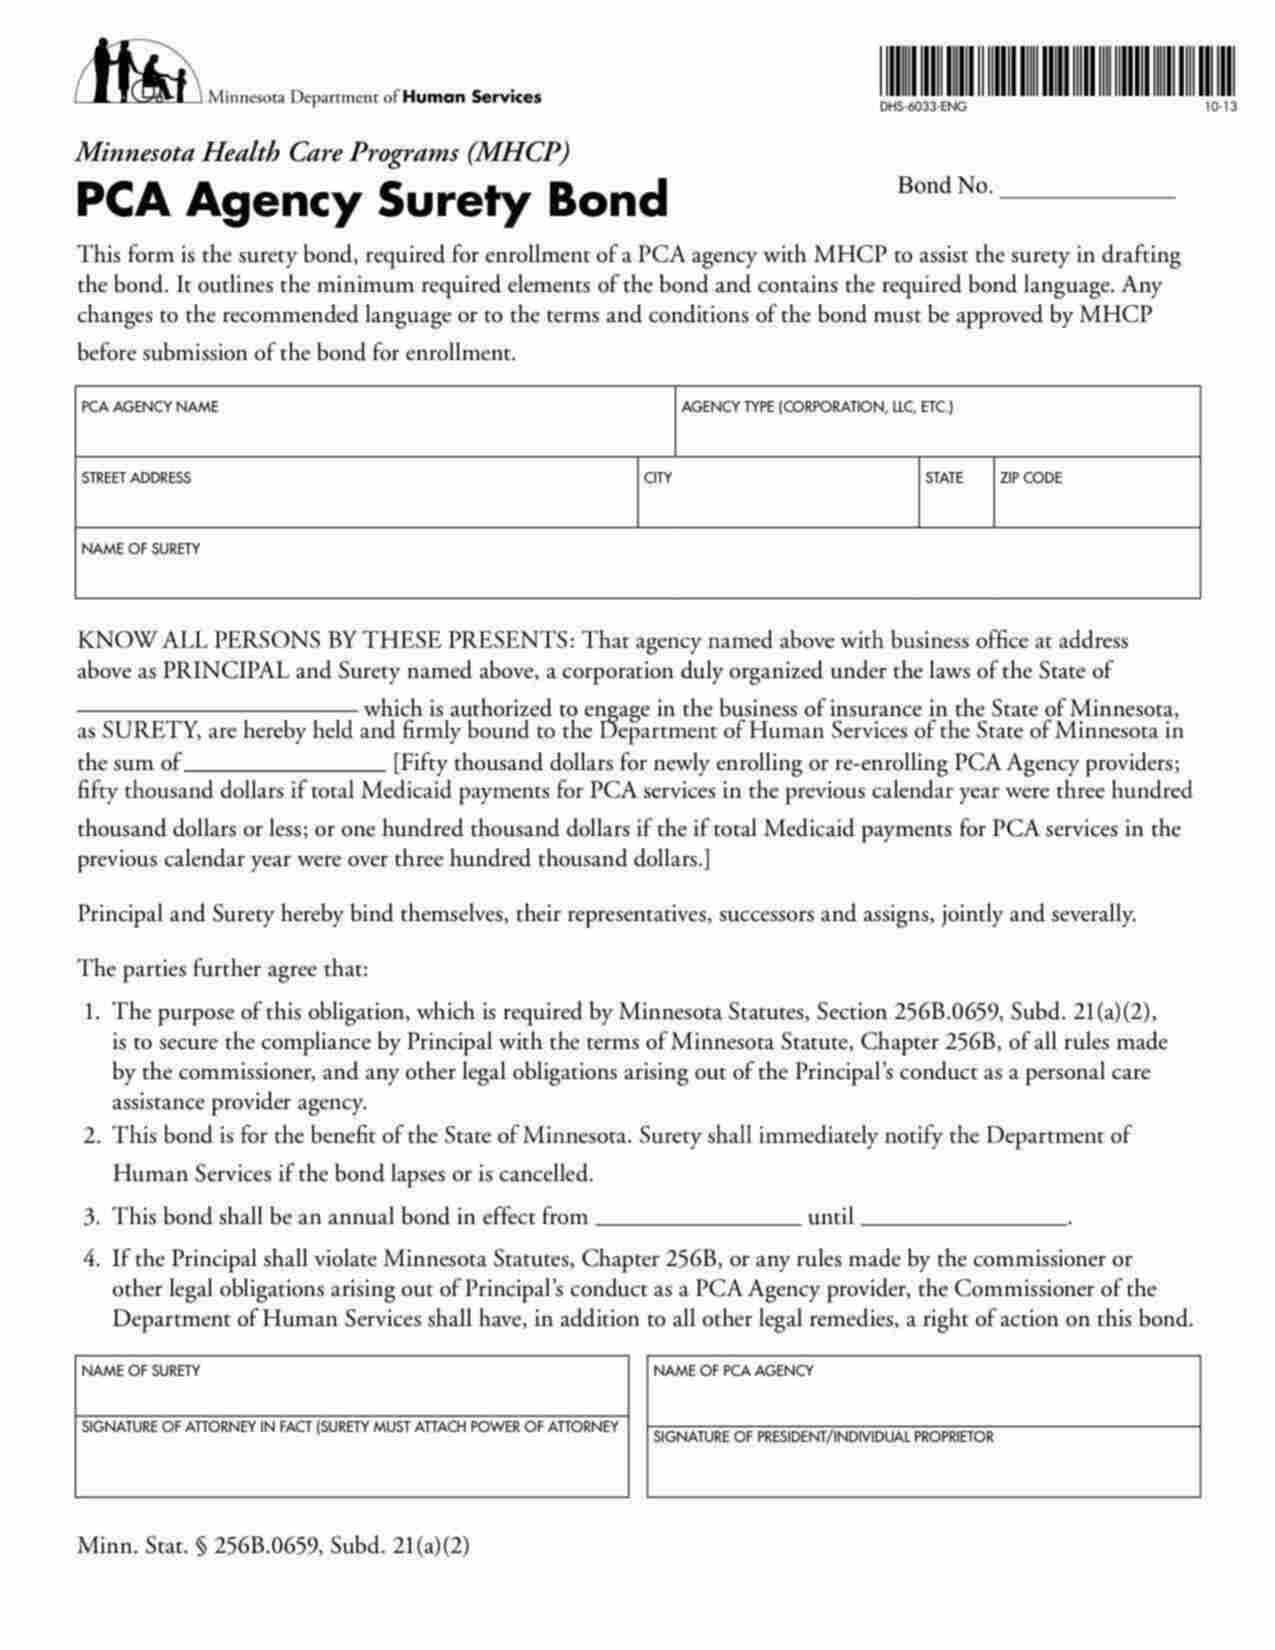 Minnesota PCA Agency (Personal Care Assistance) Bond Form